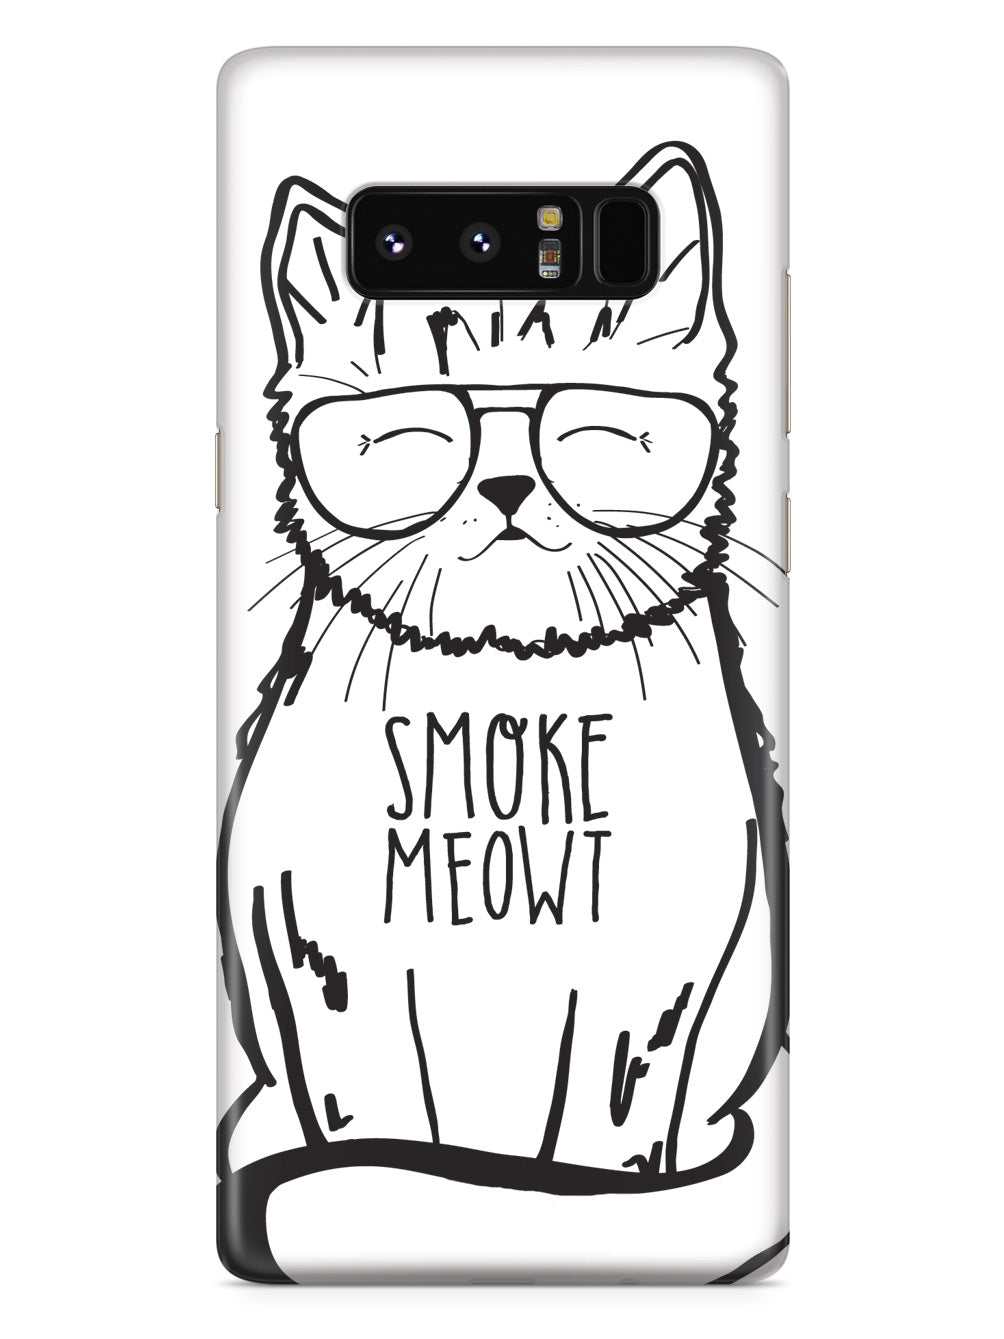 Smoke Meowt - Stoner Cat Case